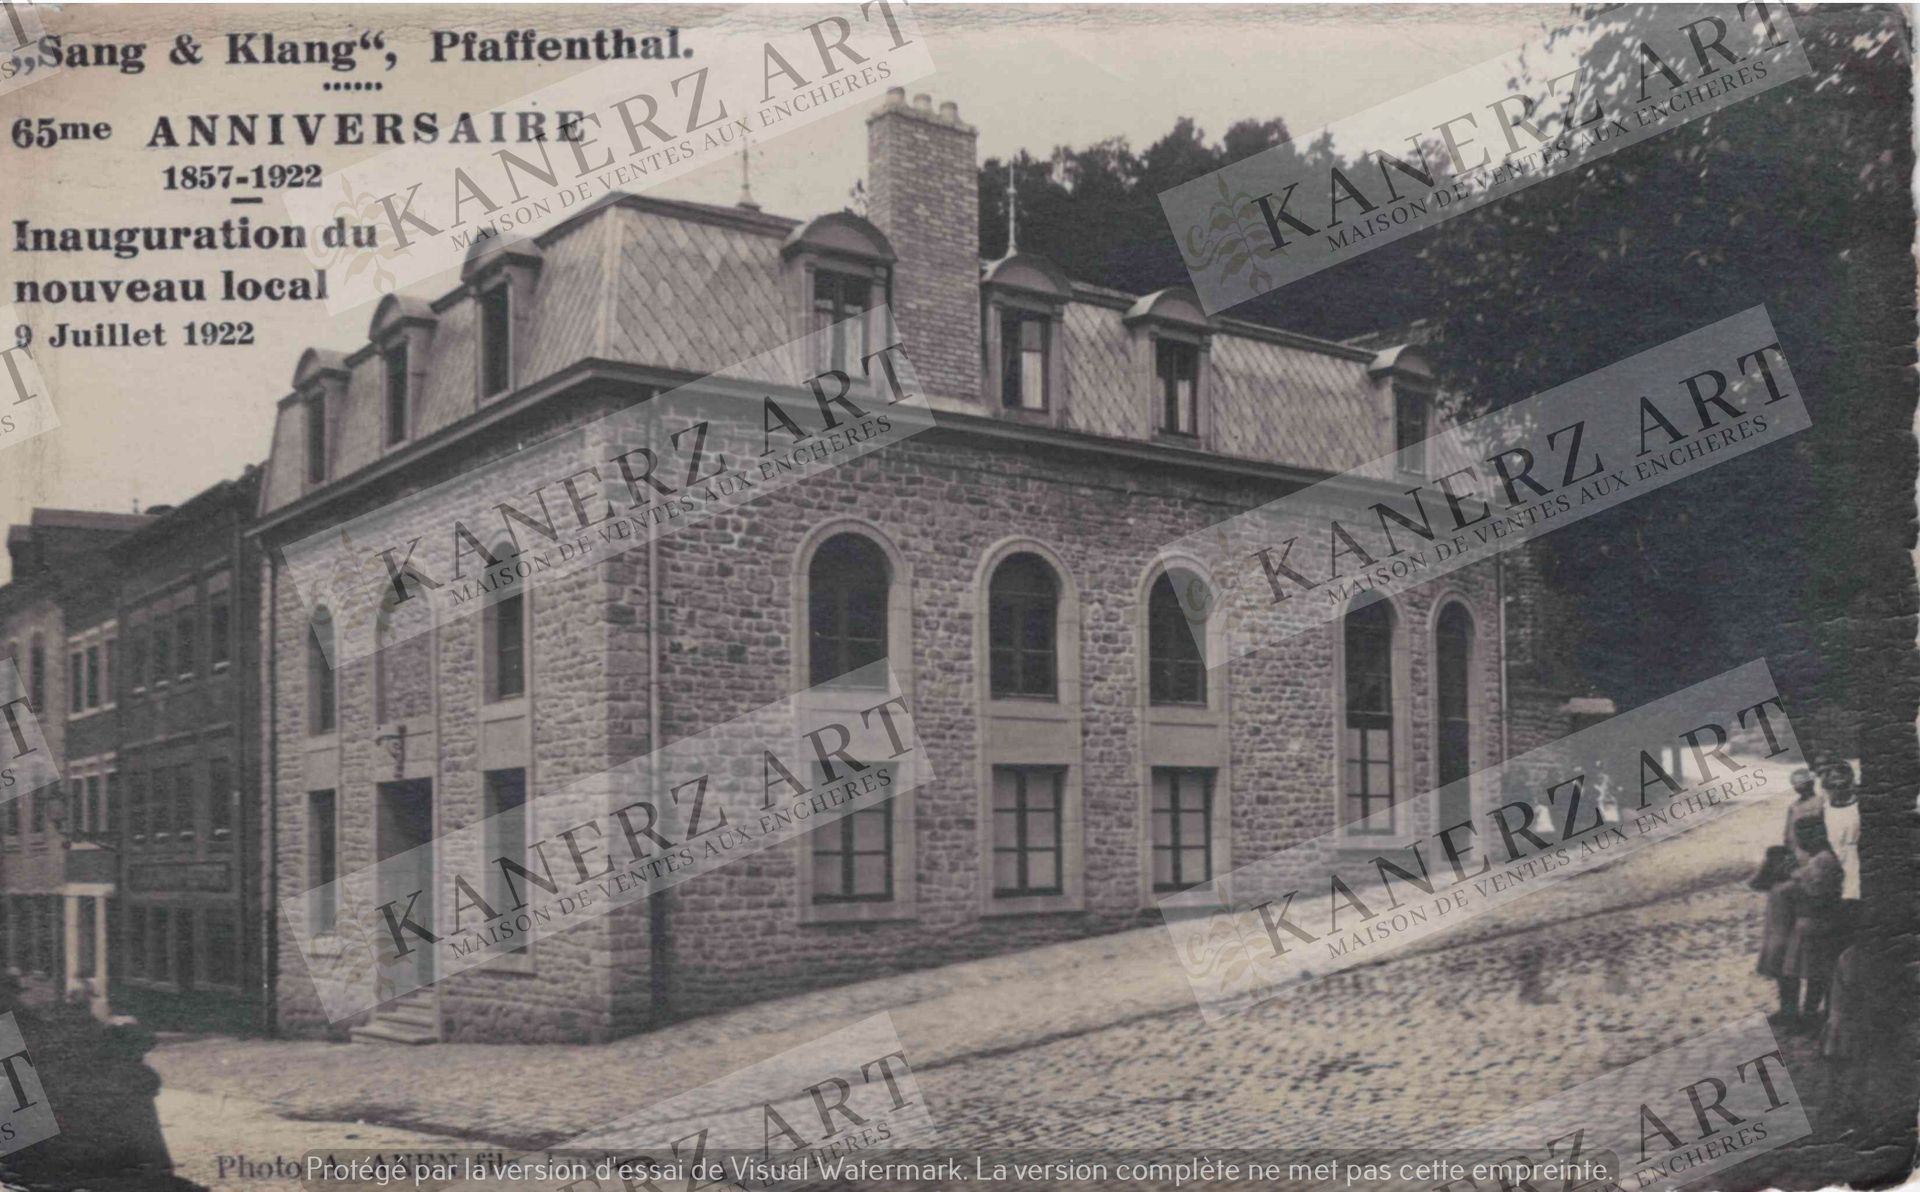 Null (OFFICIAL) Pffafenthal - Photo card "Sang Klang", 65th anniversary 1857-192&hellip;